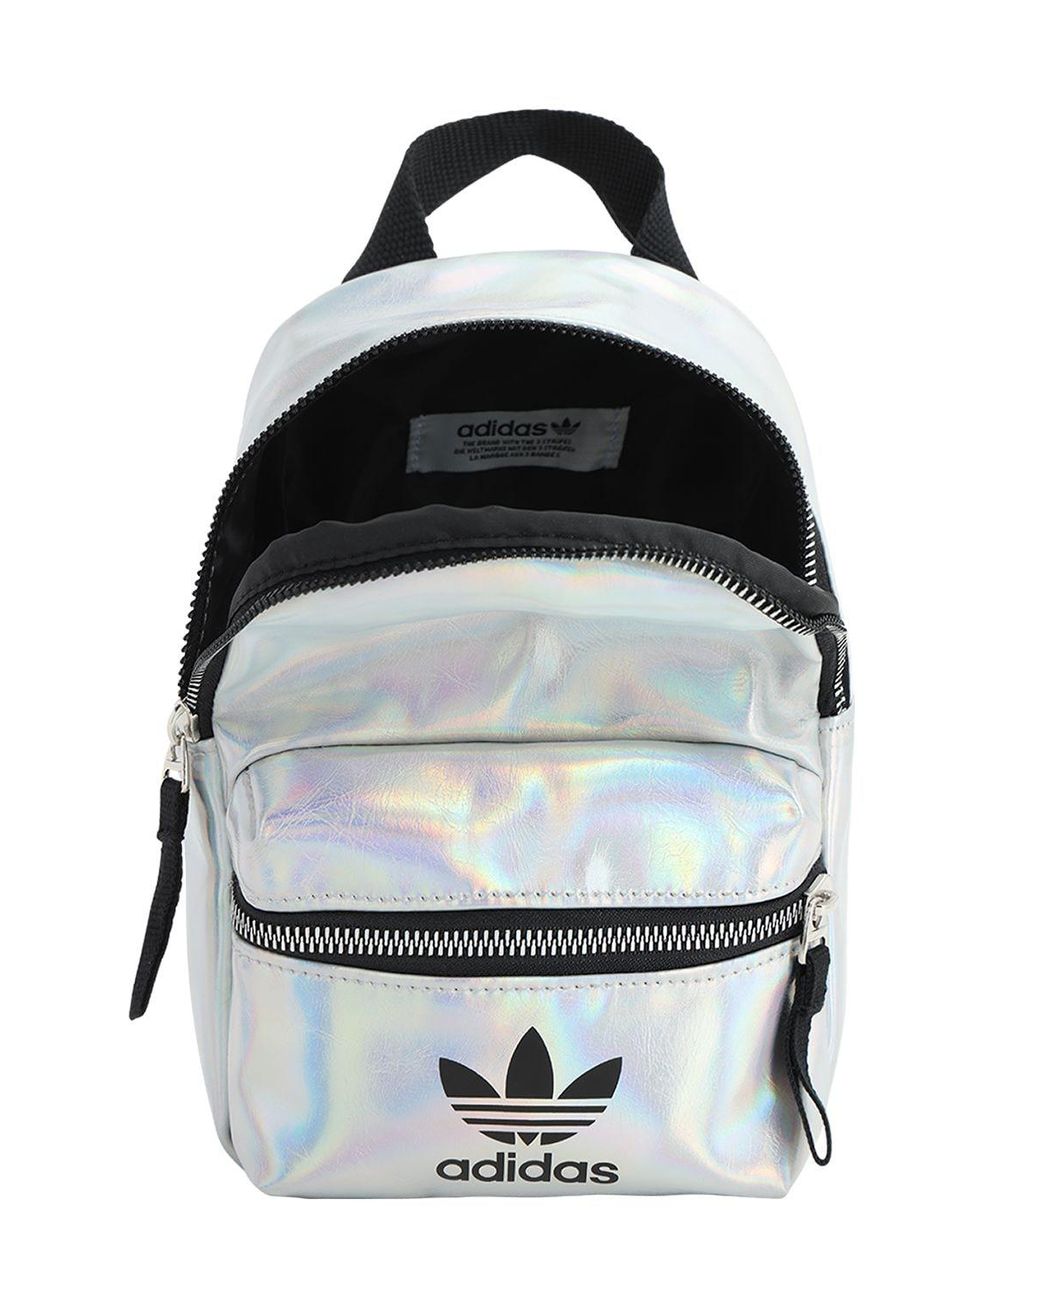 adidas Originals Mini Backpack - Save 7% - Lyst